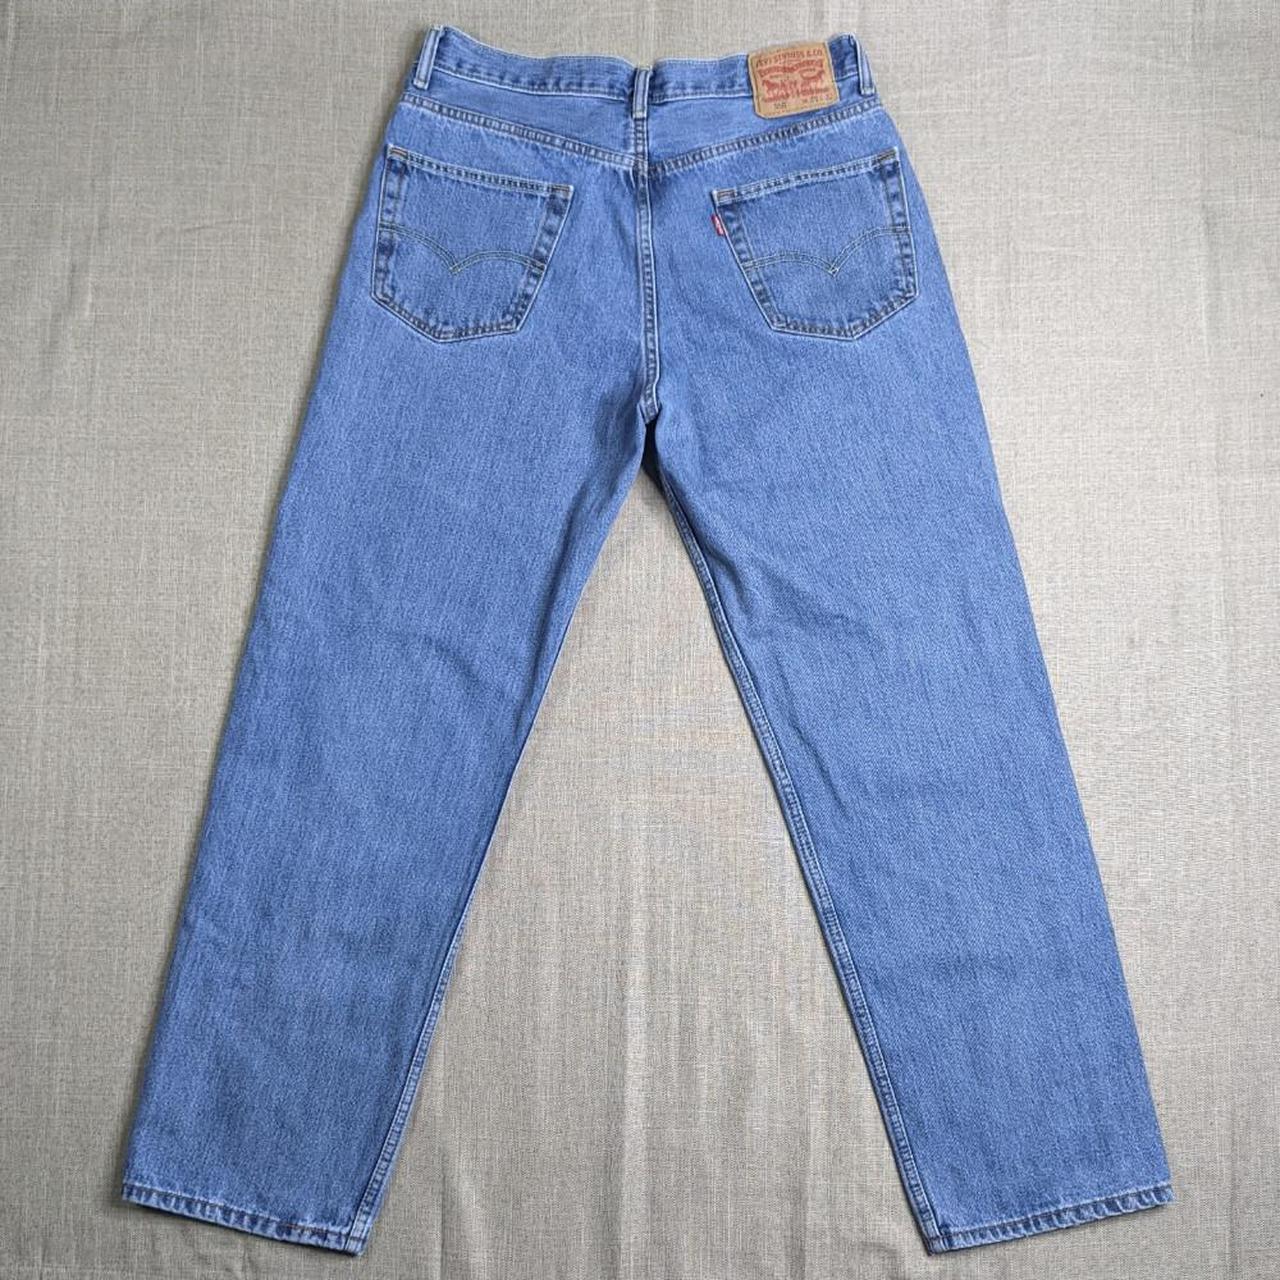 Product Image 2 - Vintage Levi's 550 dad jeans.